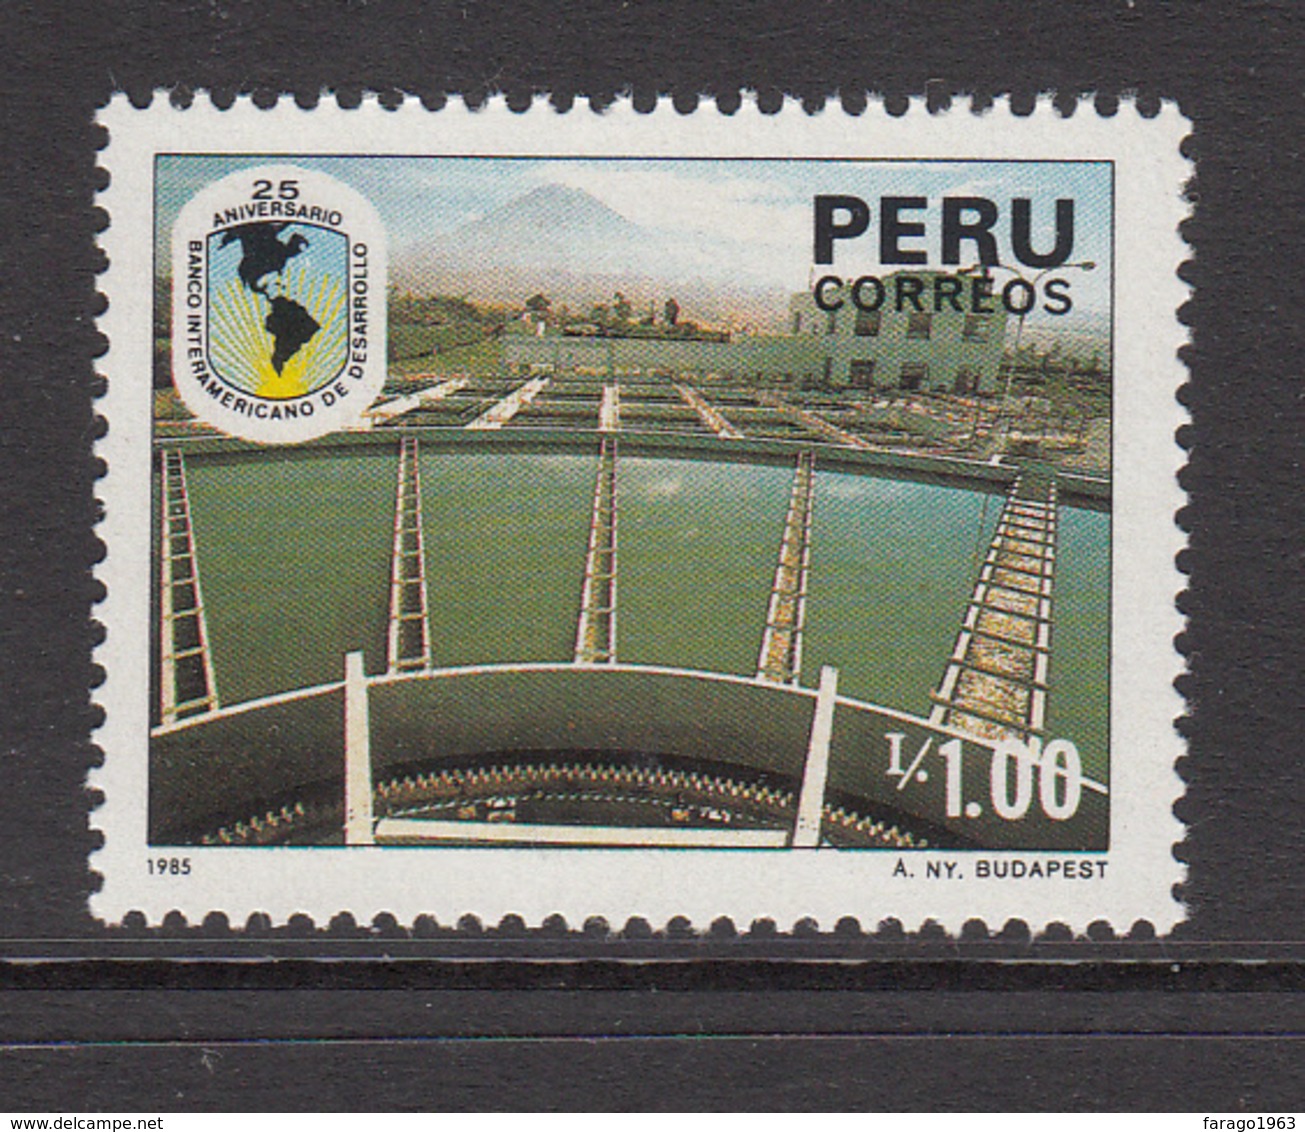 1986 Peru  IADB  Bank Development Complete Set Of 1  MNH - Peru